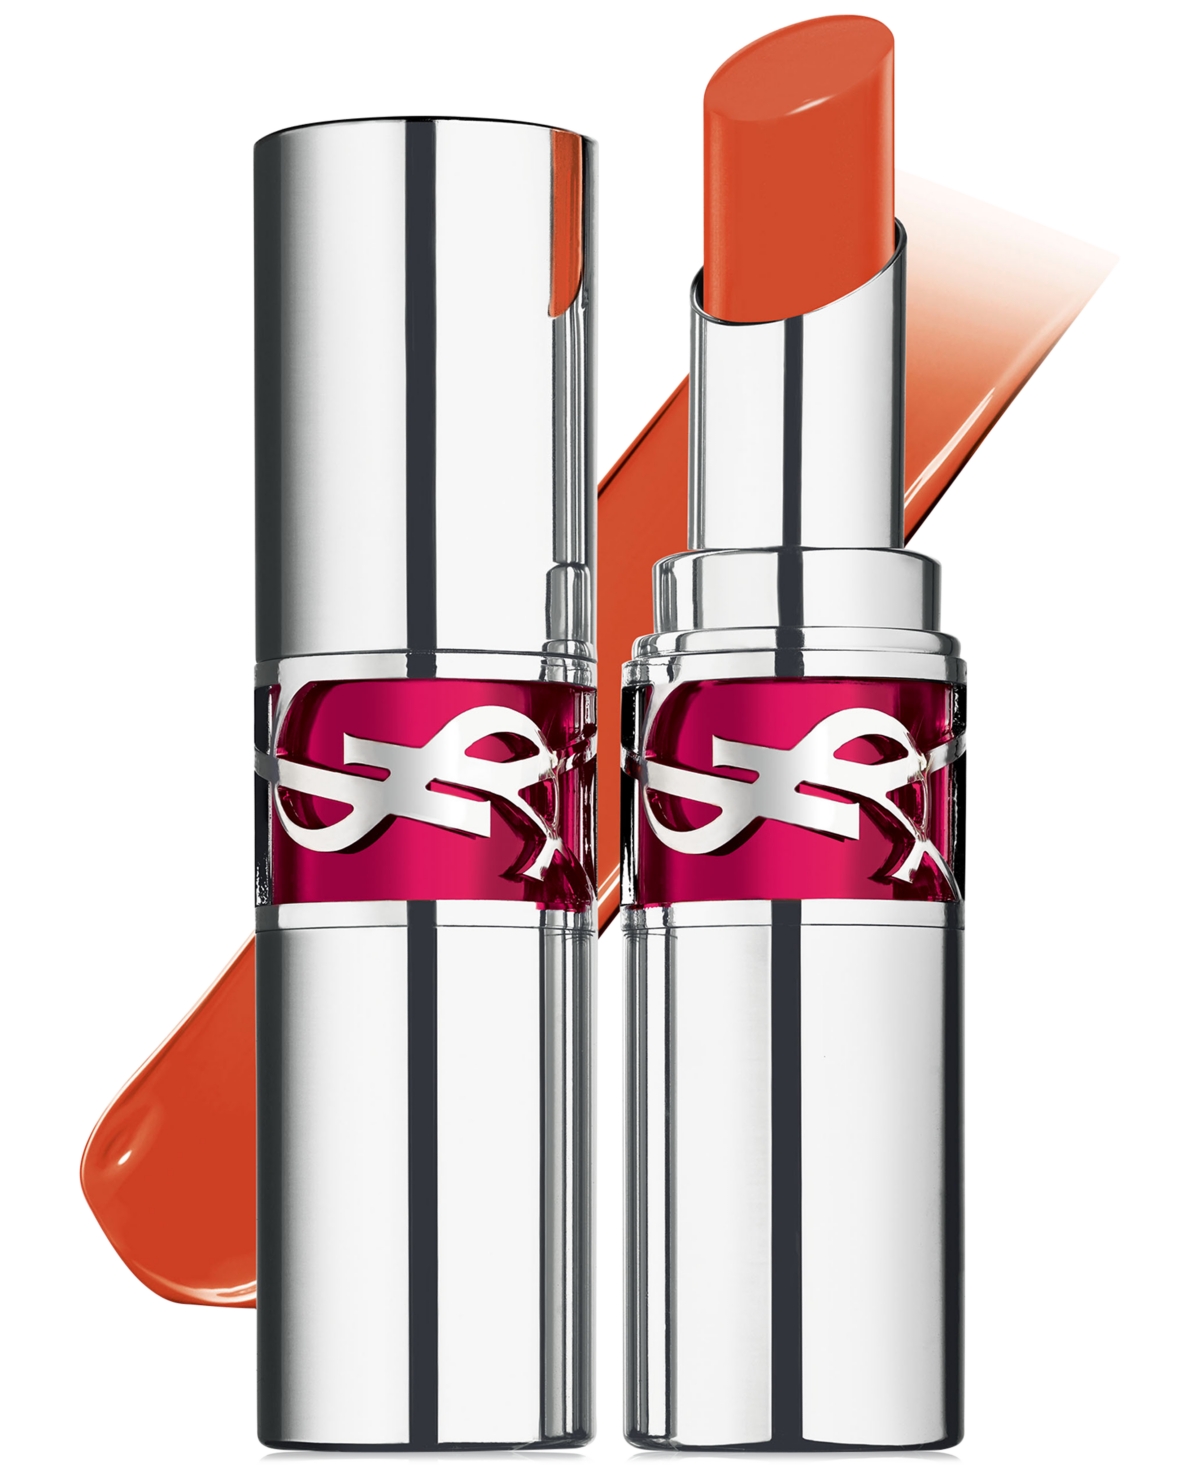 Yves Saint Laurent Candy Glaze Lip Gloss Stick